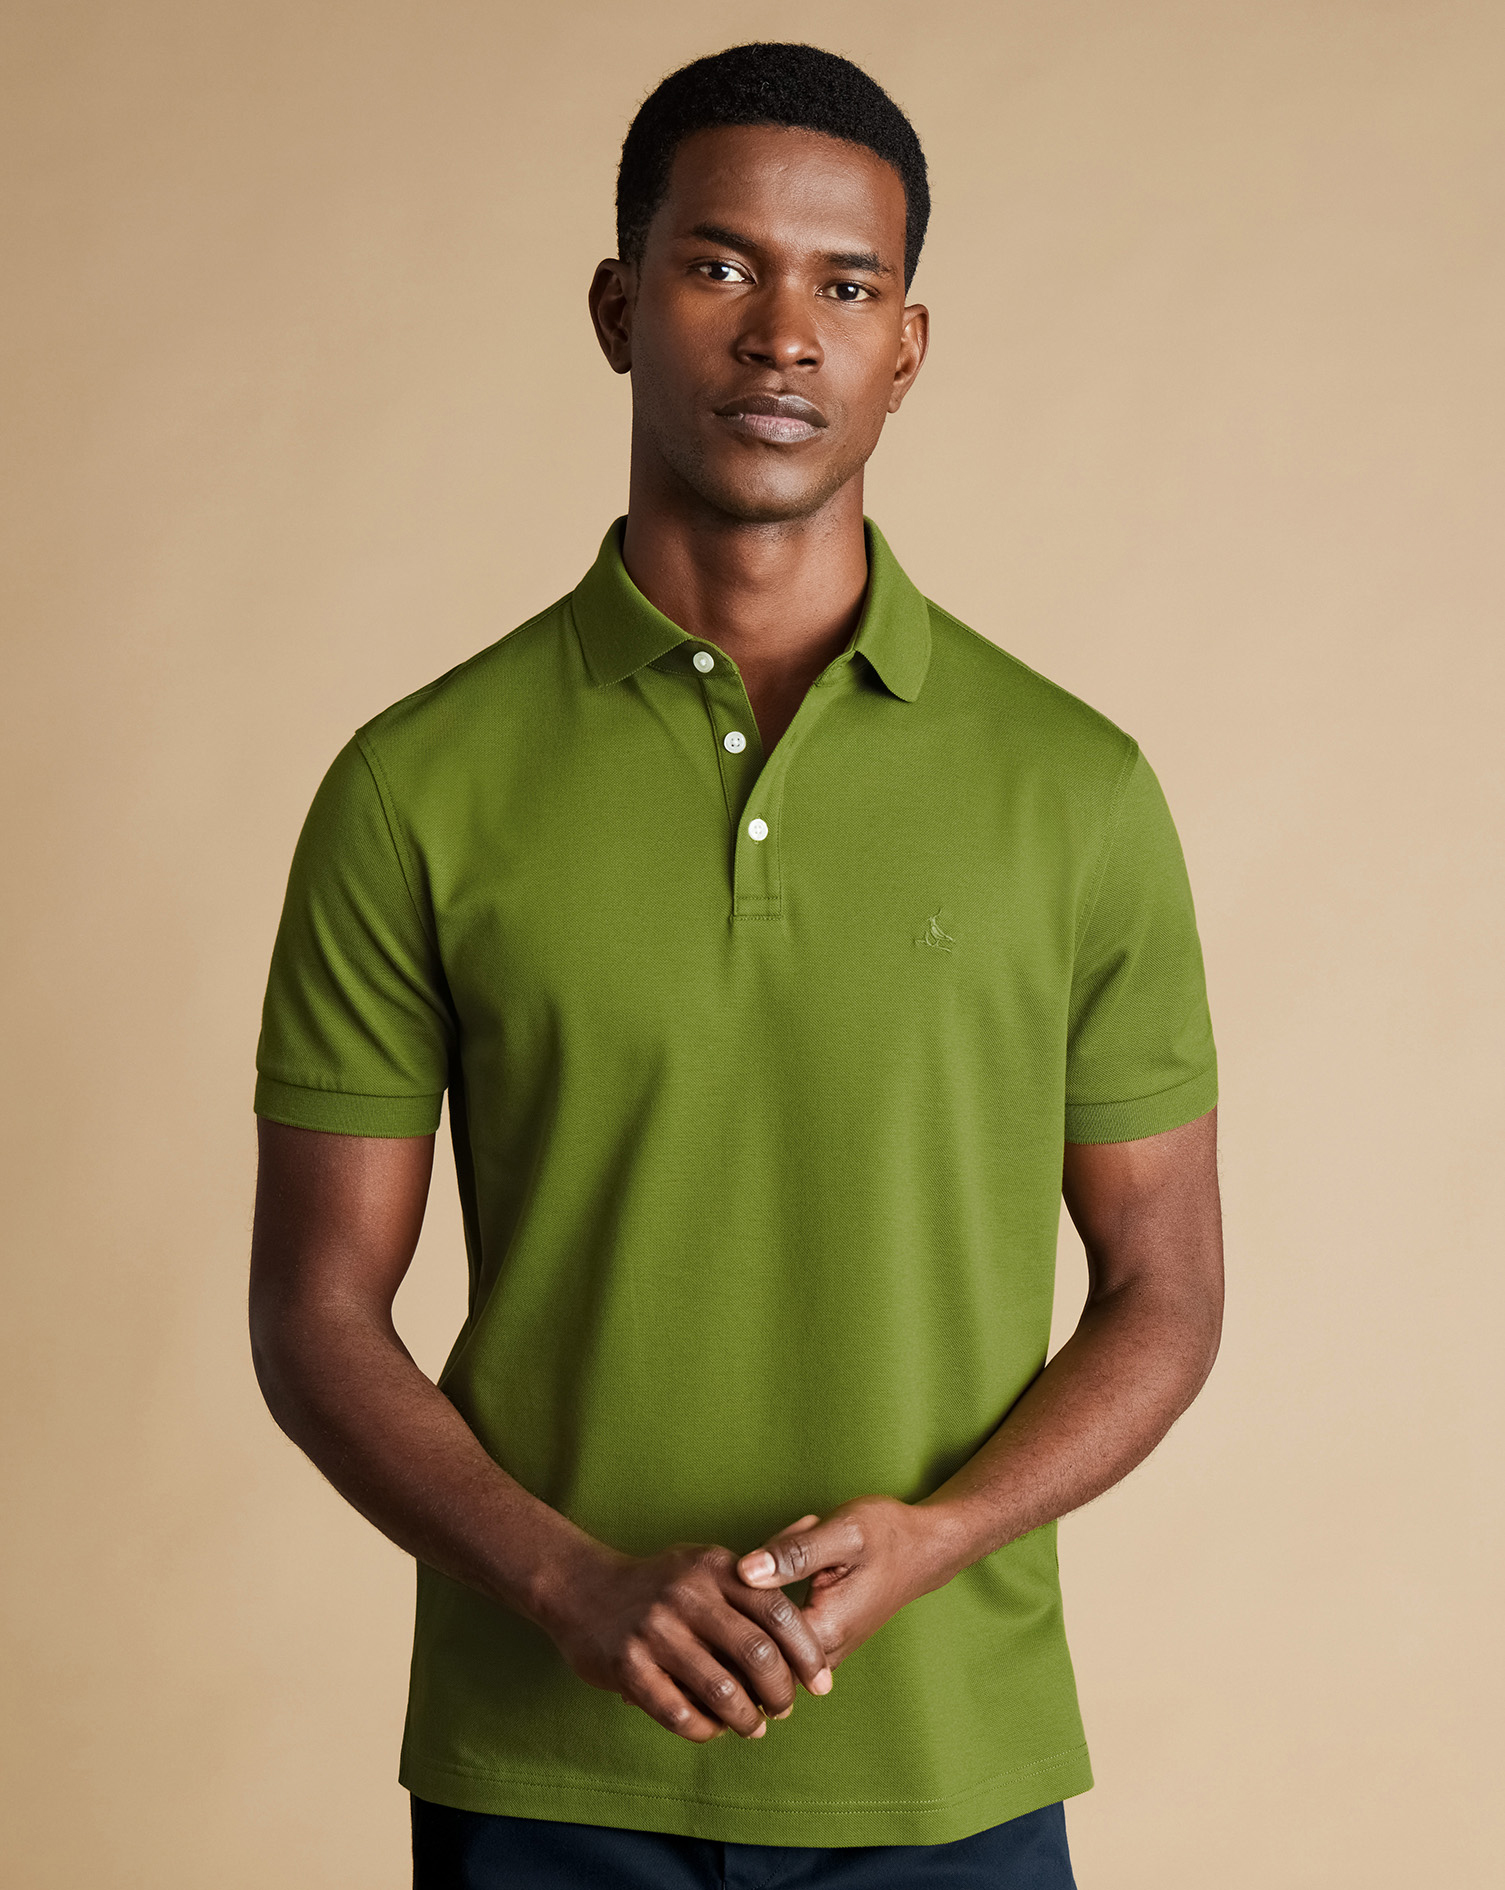 Men's Charles Tyrwhitt Pique Polo Shirt - Bright Green Size Medium Cotton
